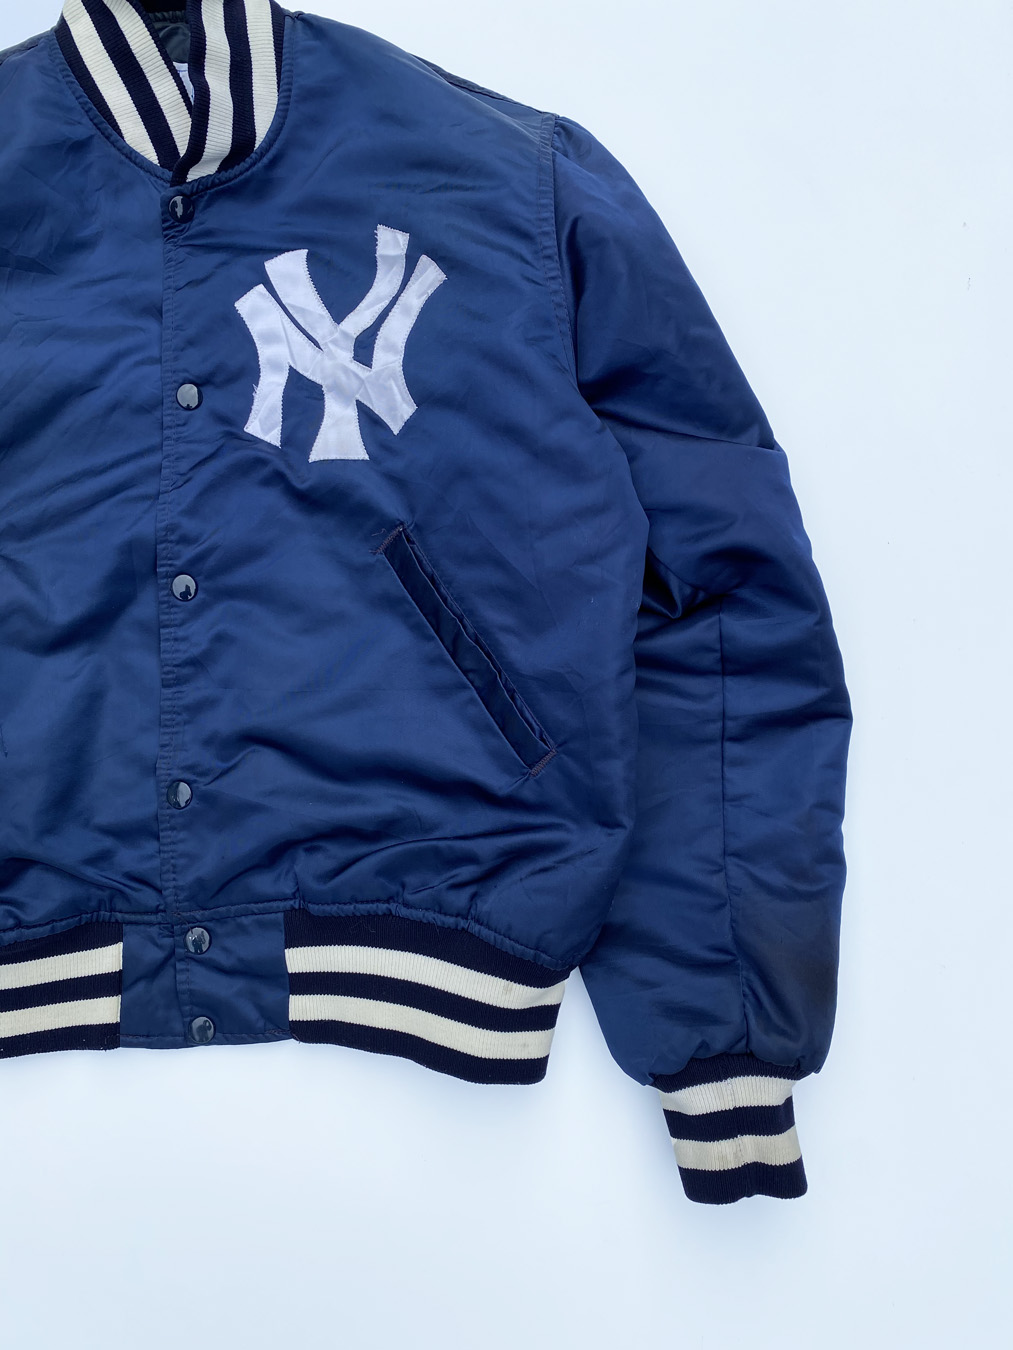 Shop Starter New York Yankees Starter Satin Jacket LS25E167-NYY blue